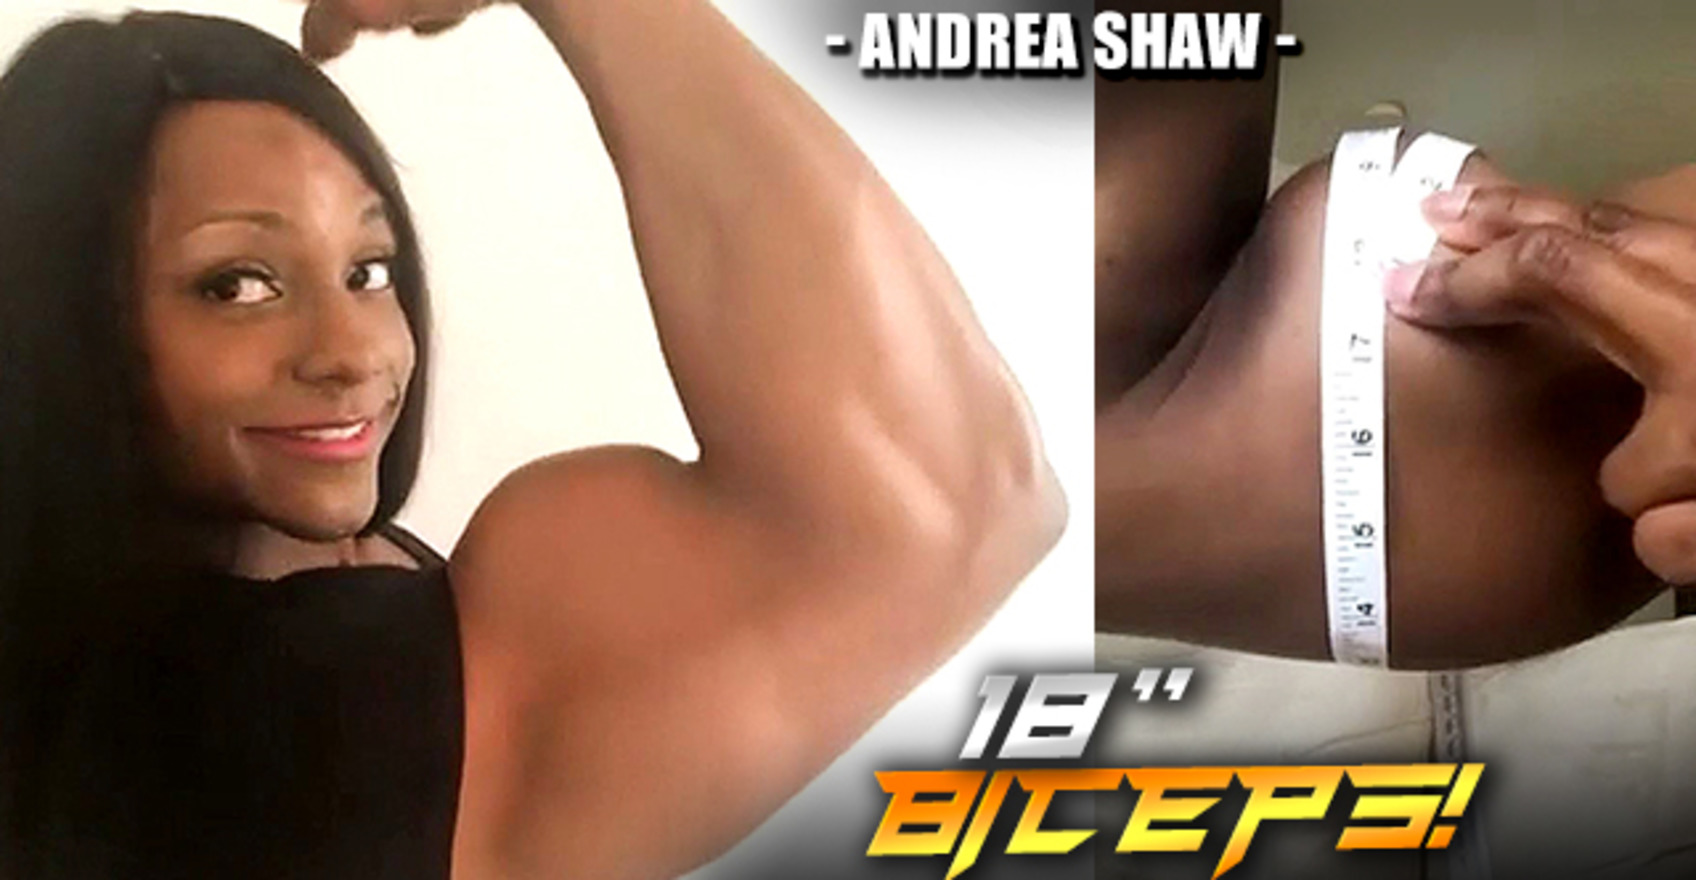 Andrea shaw biceps